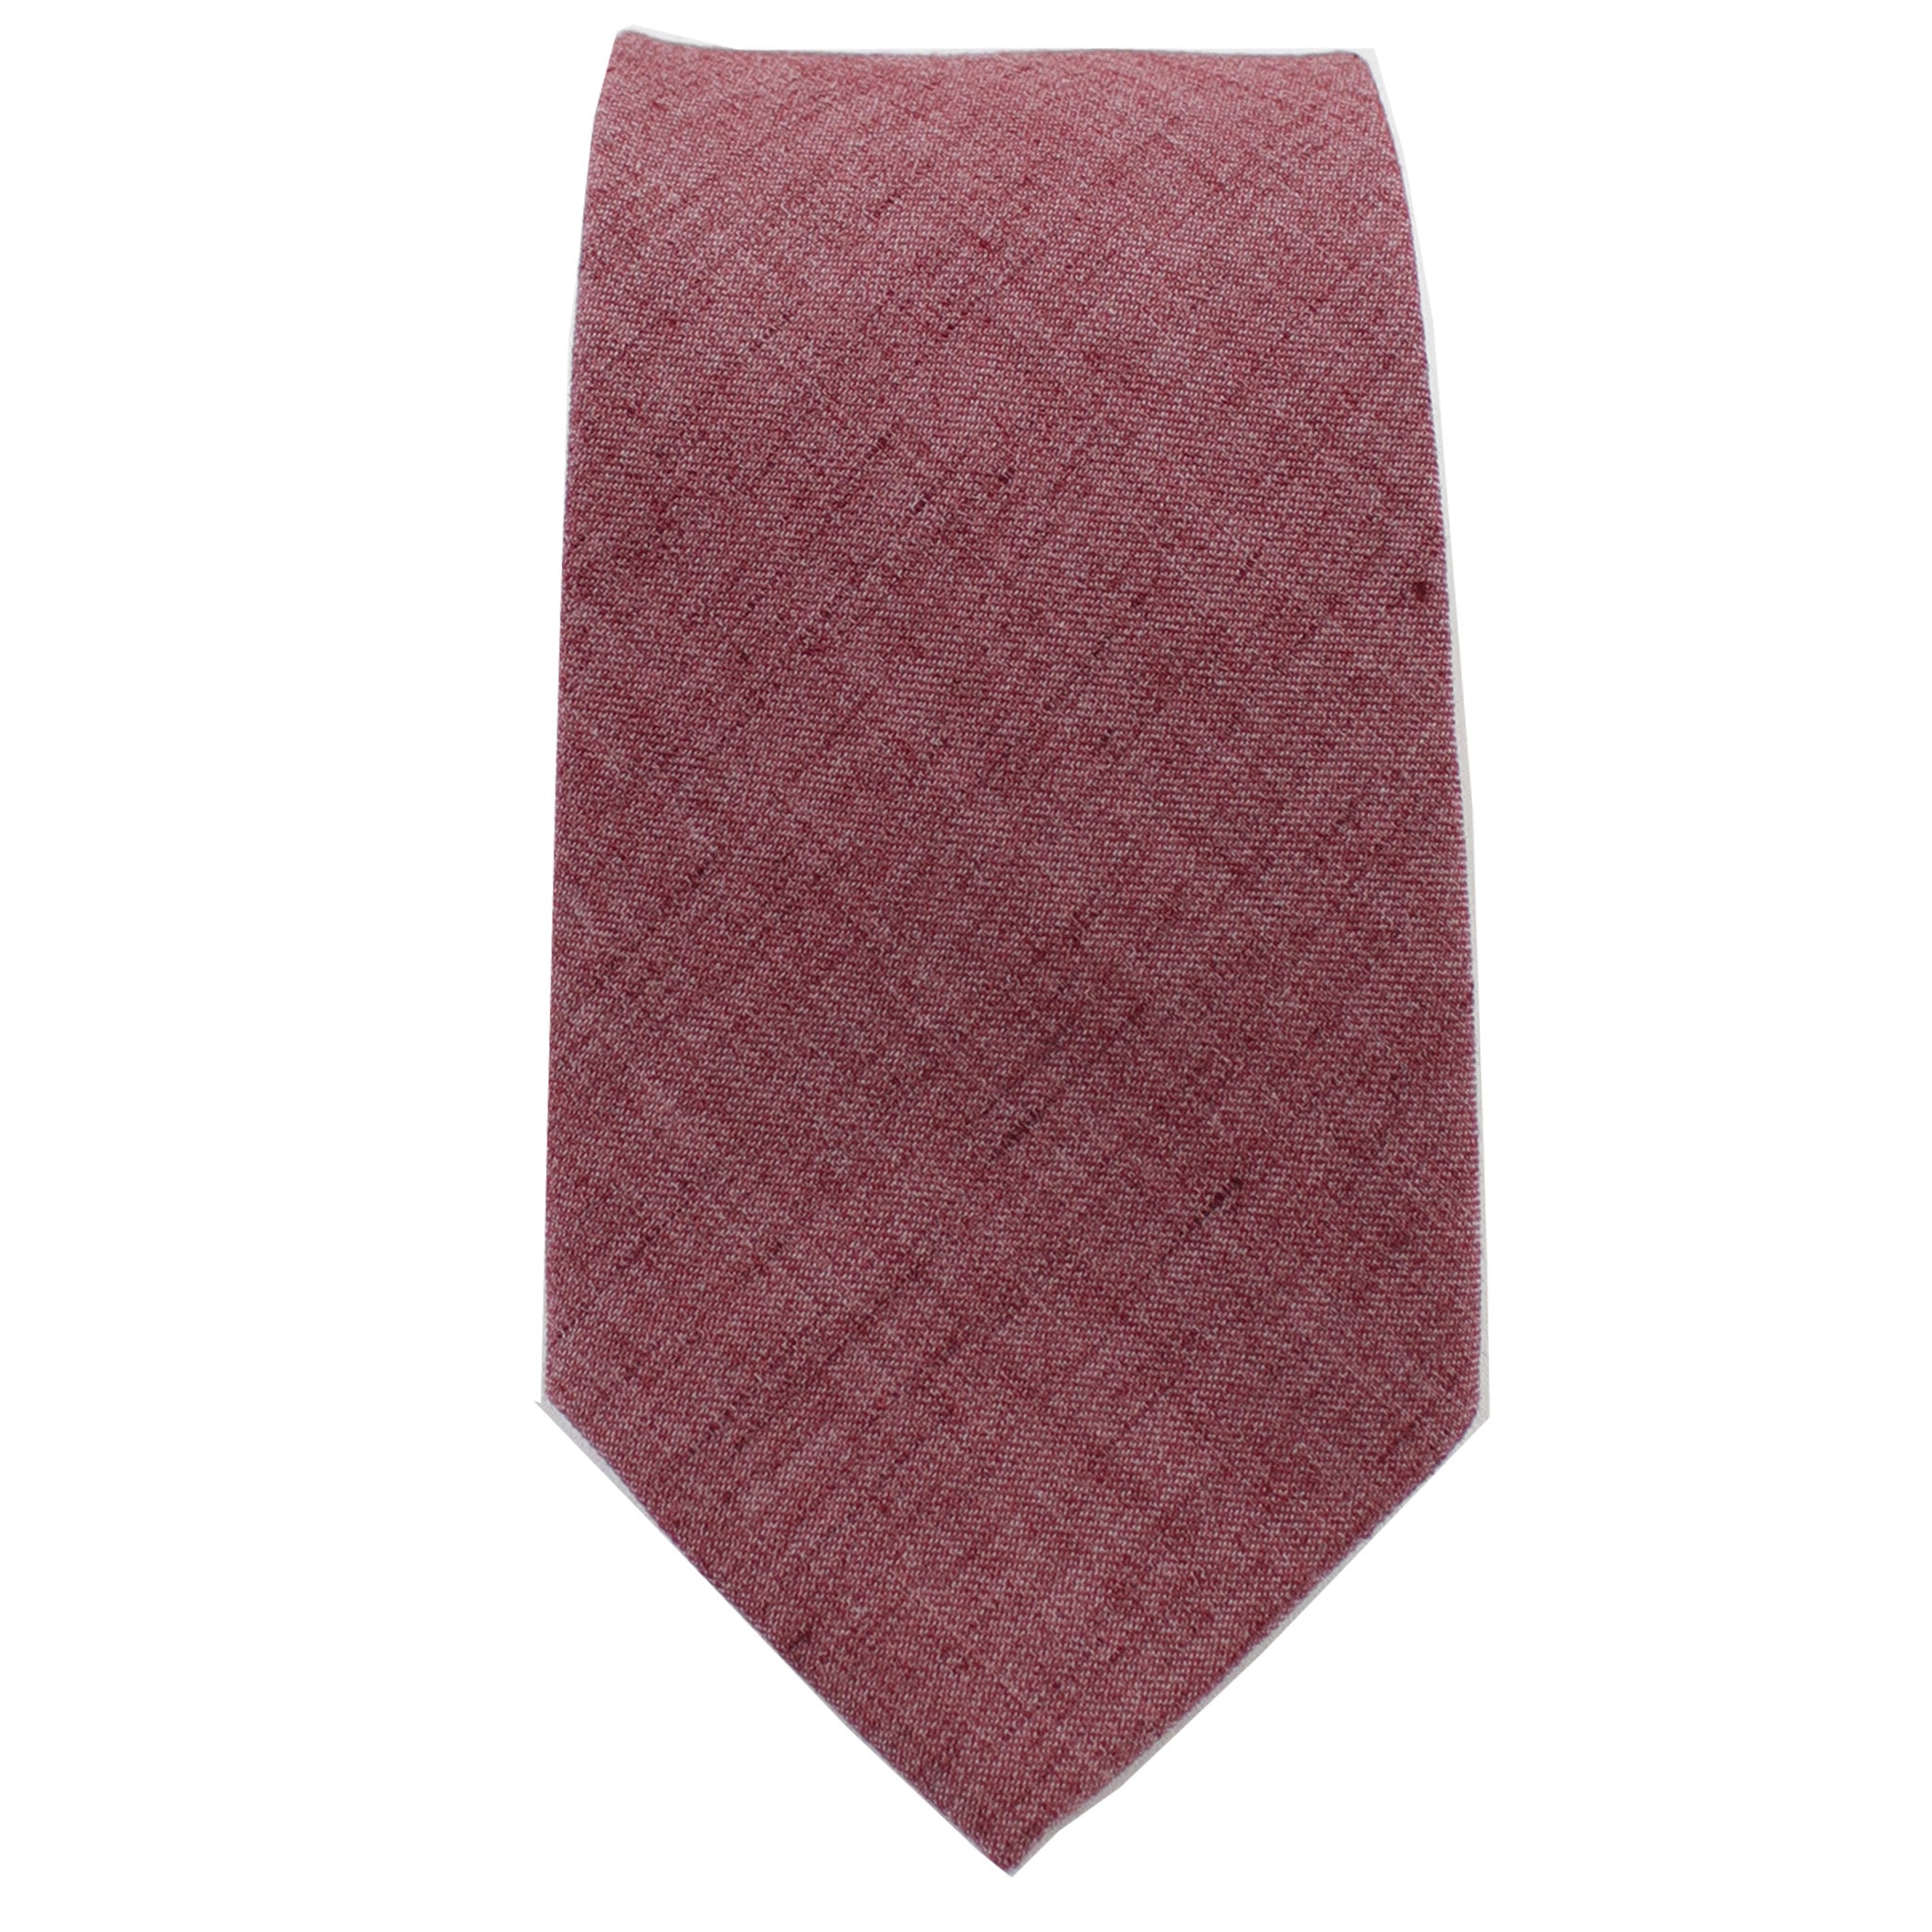 Lightweight Red Tie from DIBI